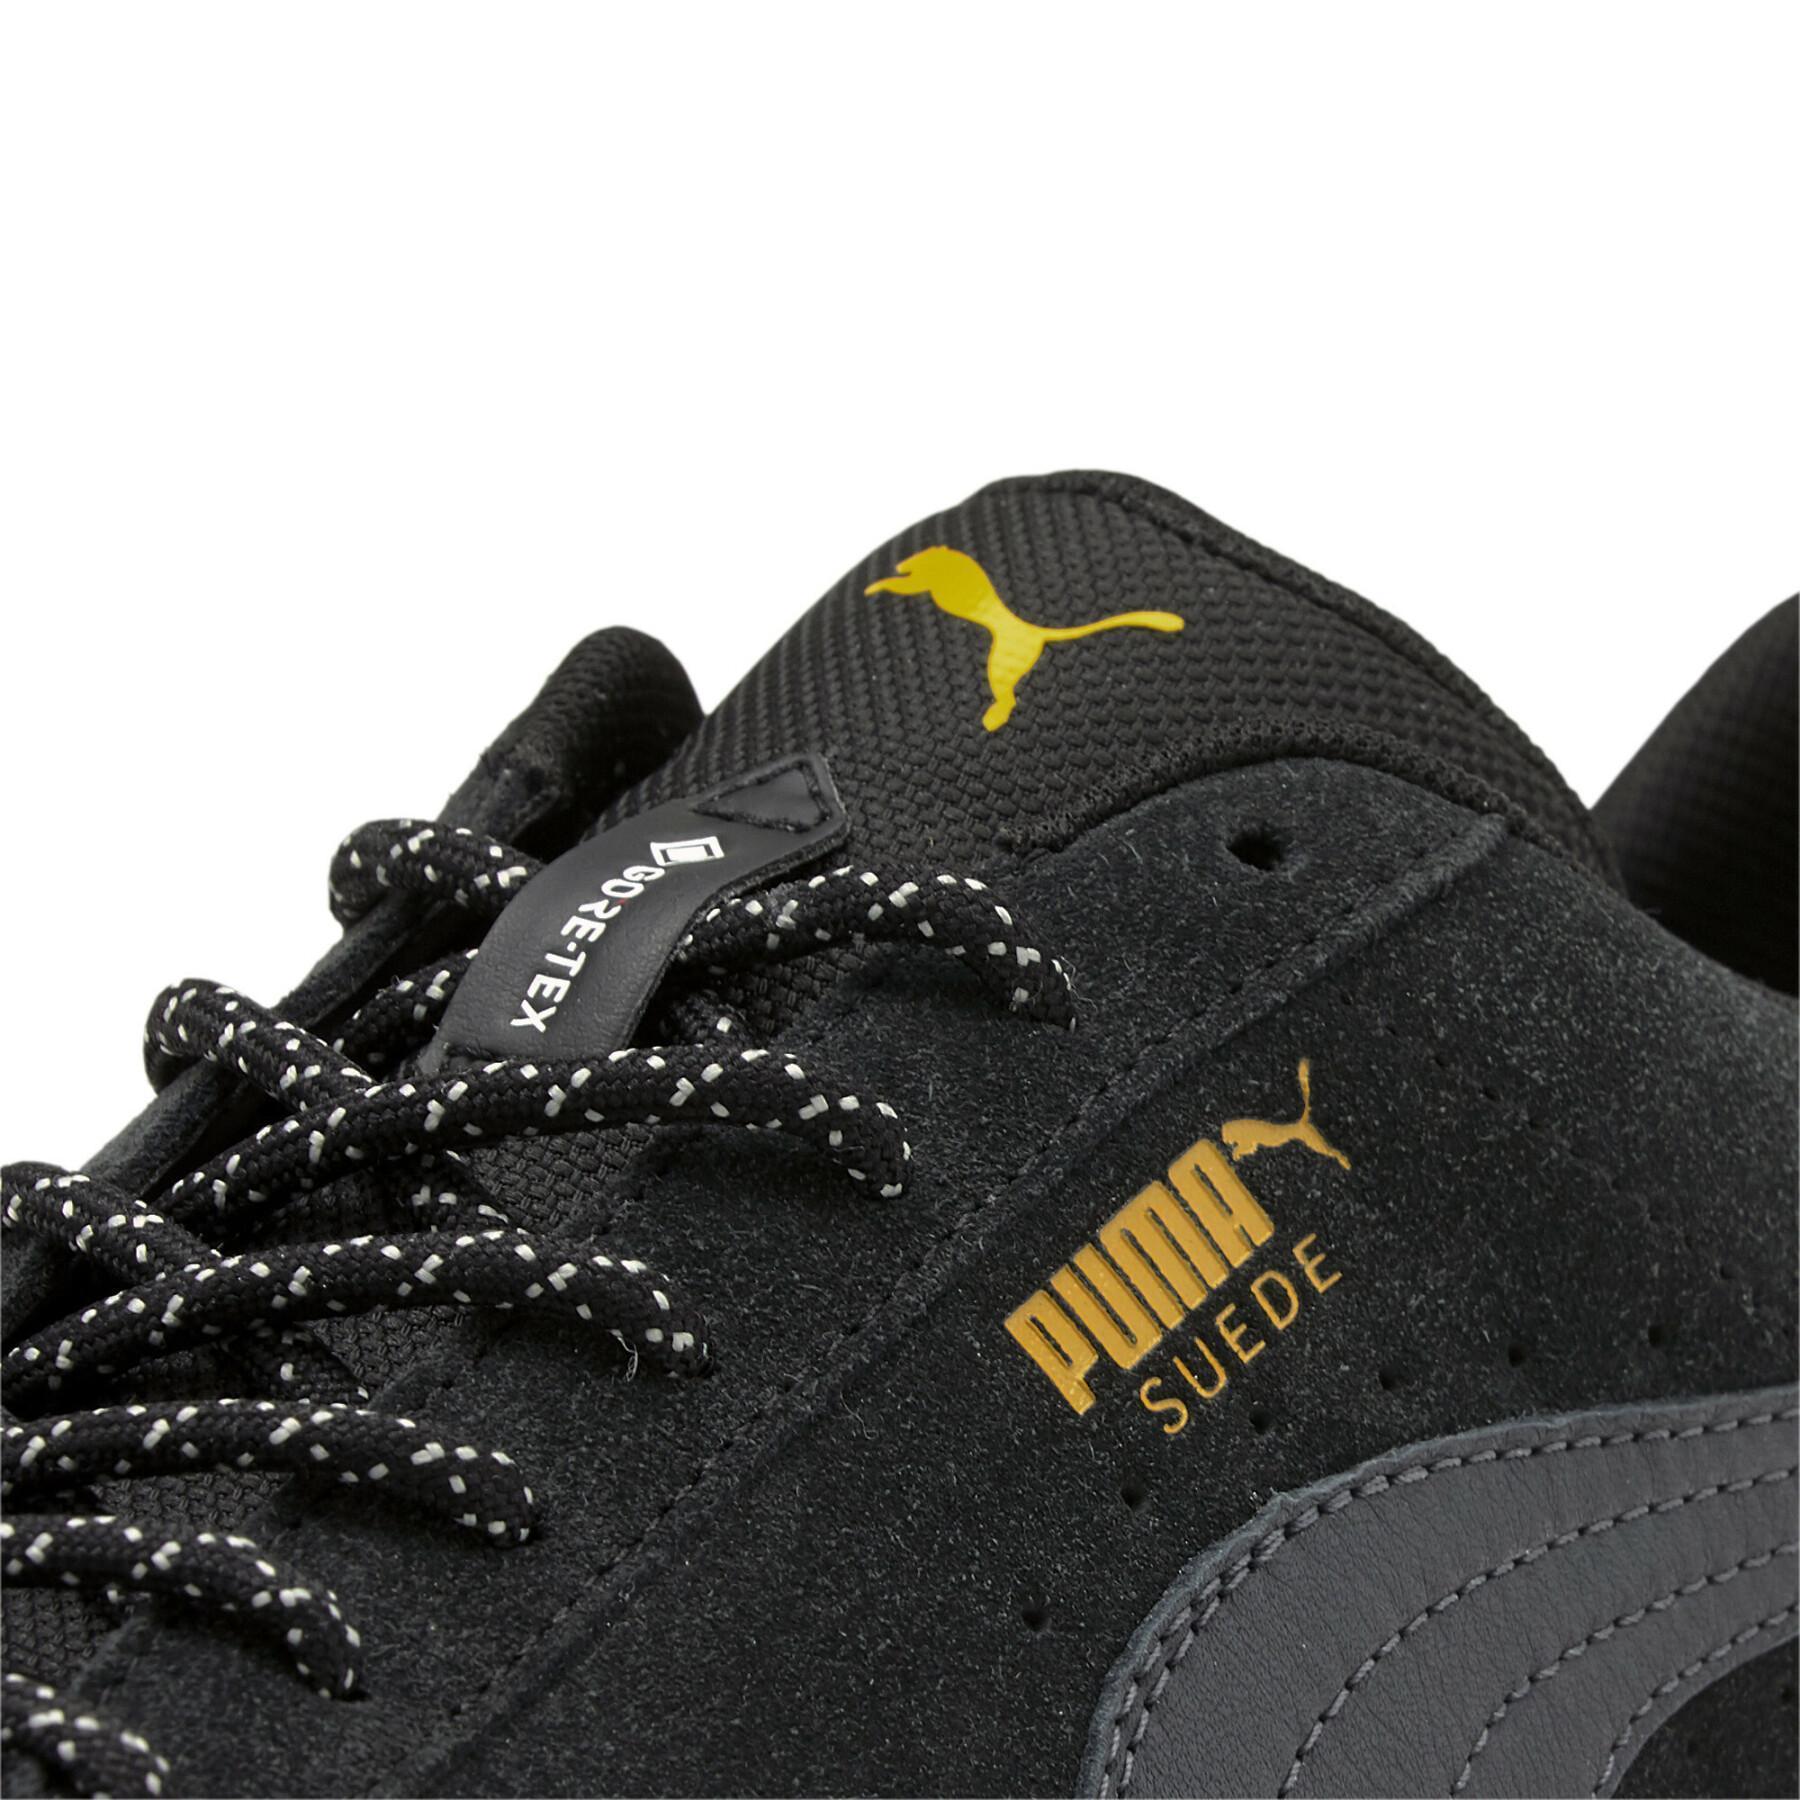 Sneakers Puma Suede GTX - Puma - Men's Sneakers - Lifestyle